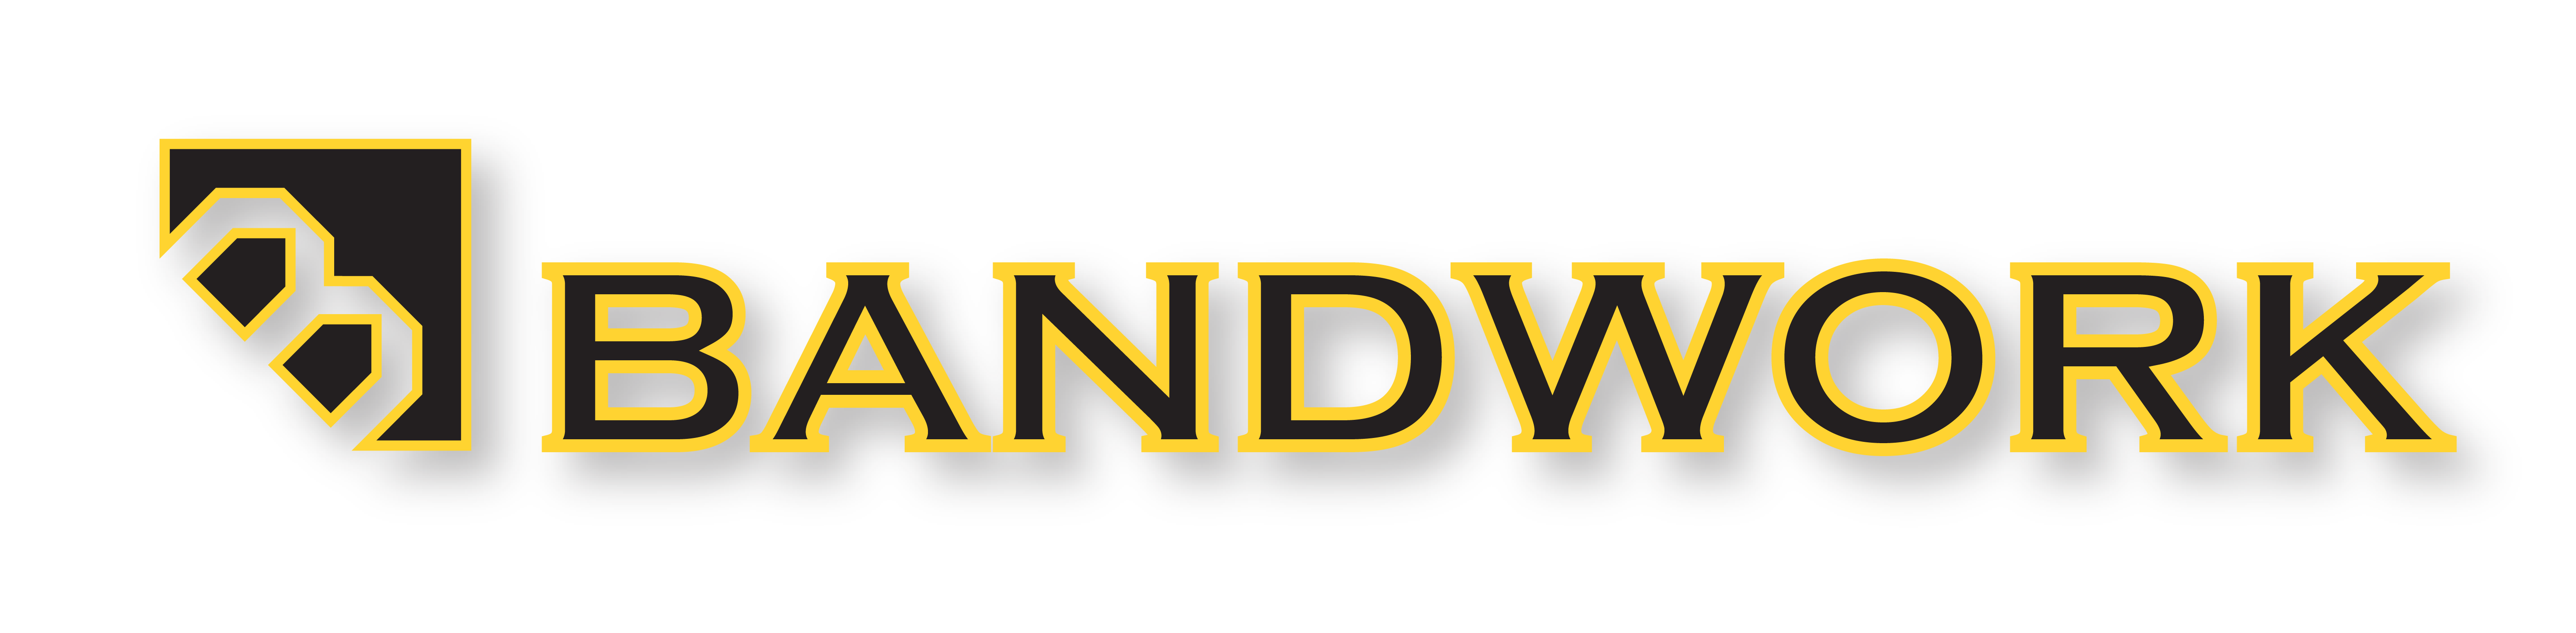 Bandwork logo